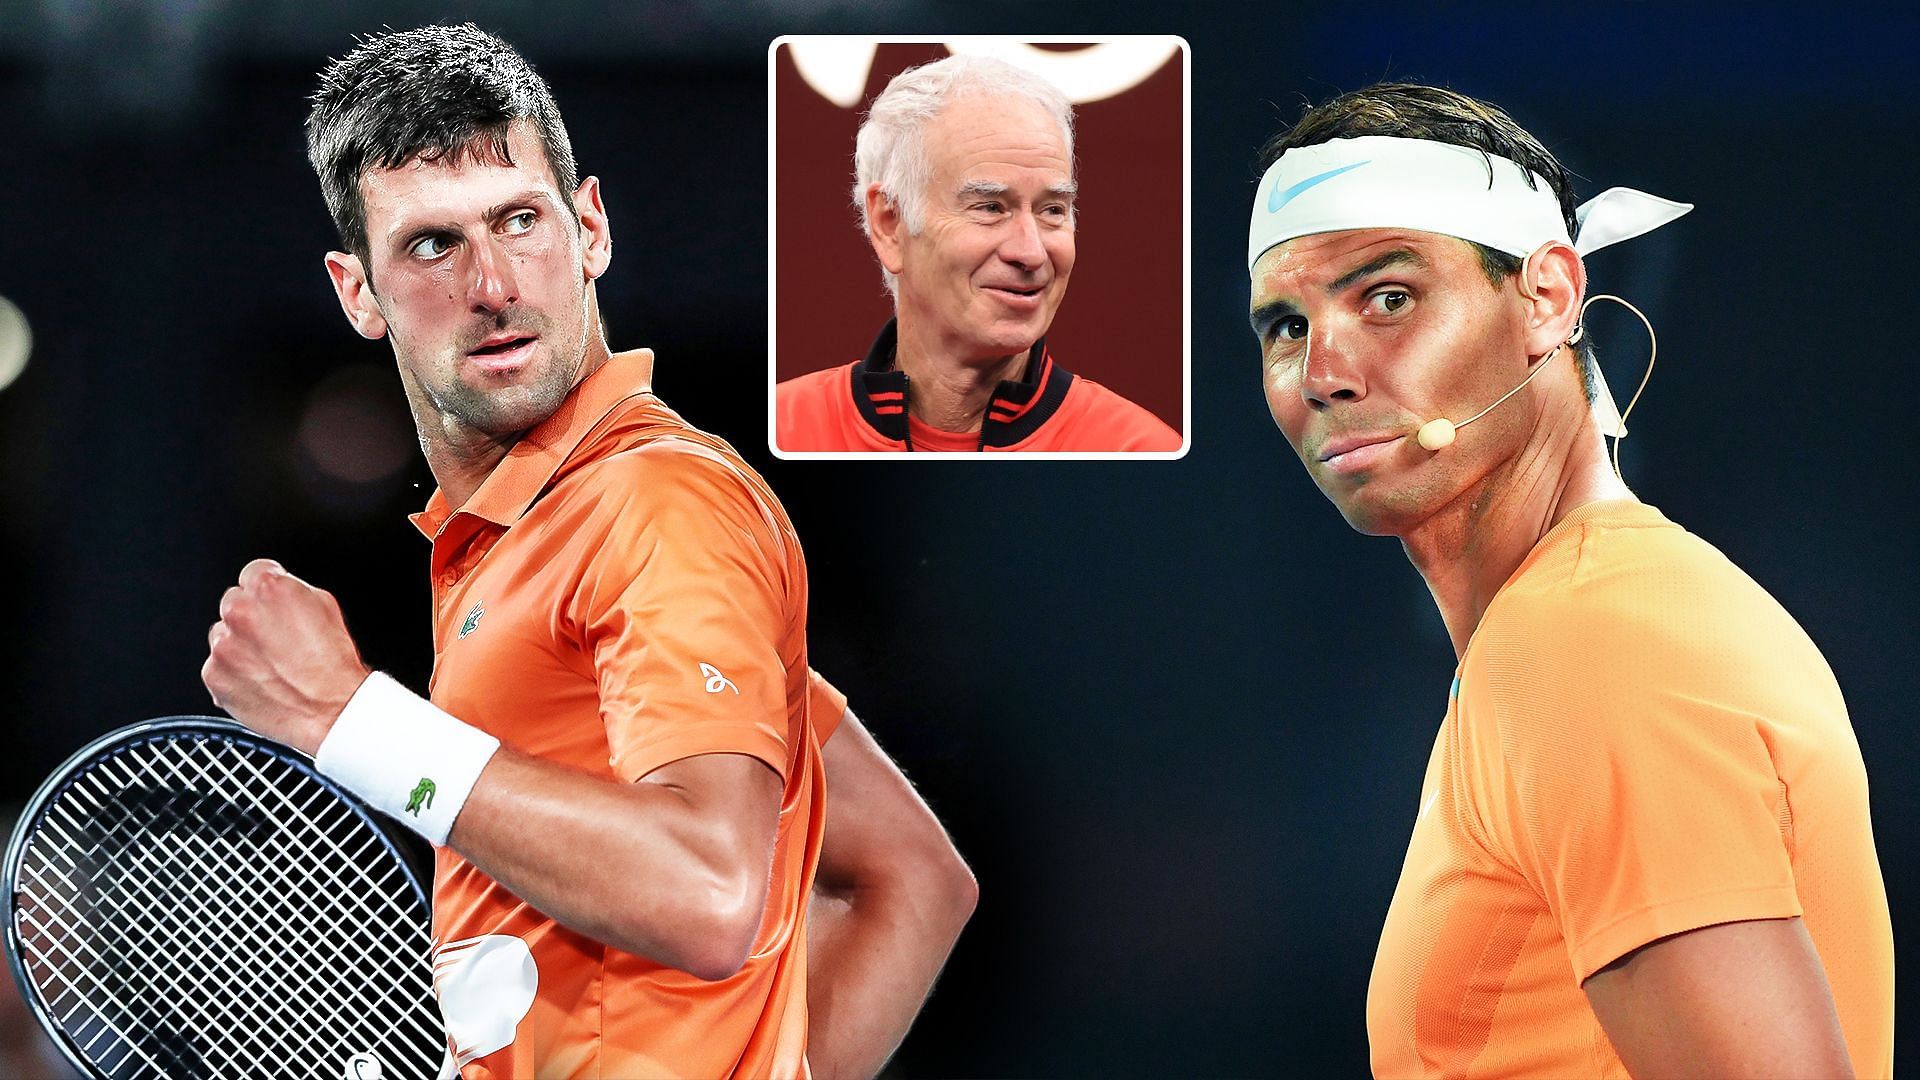 L-R: Novak Djokovic, John McEnroe, and Rafael Nadal